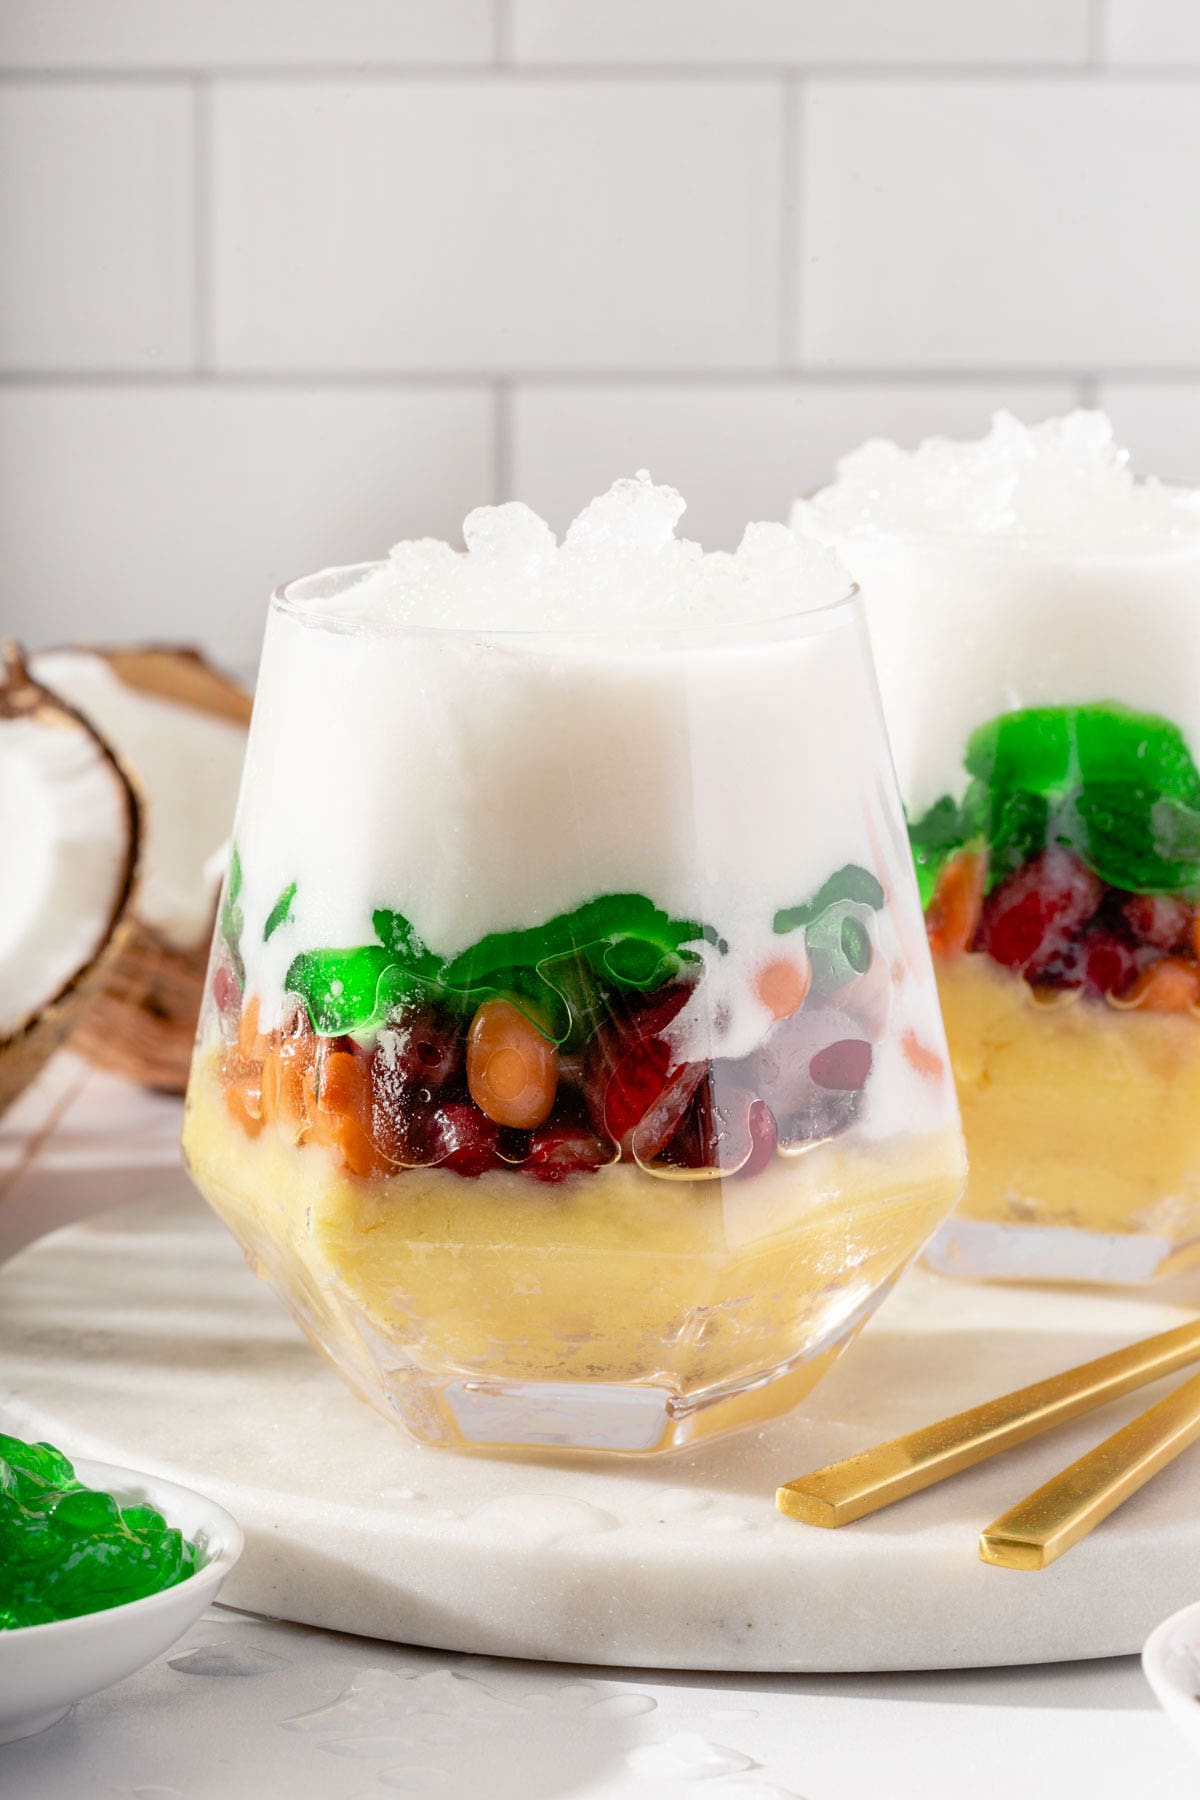 Vietnamese three-color dessert